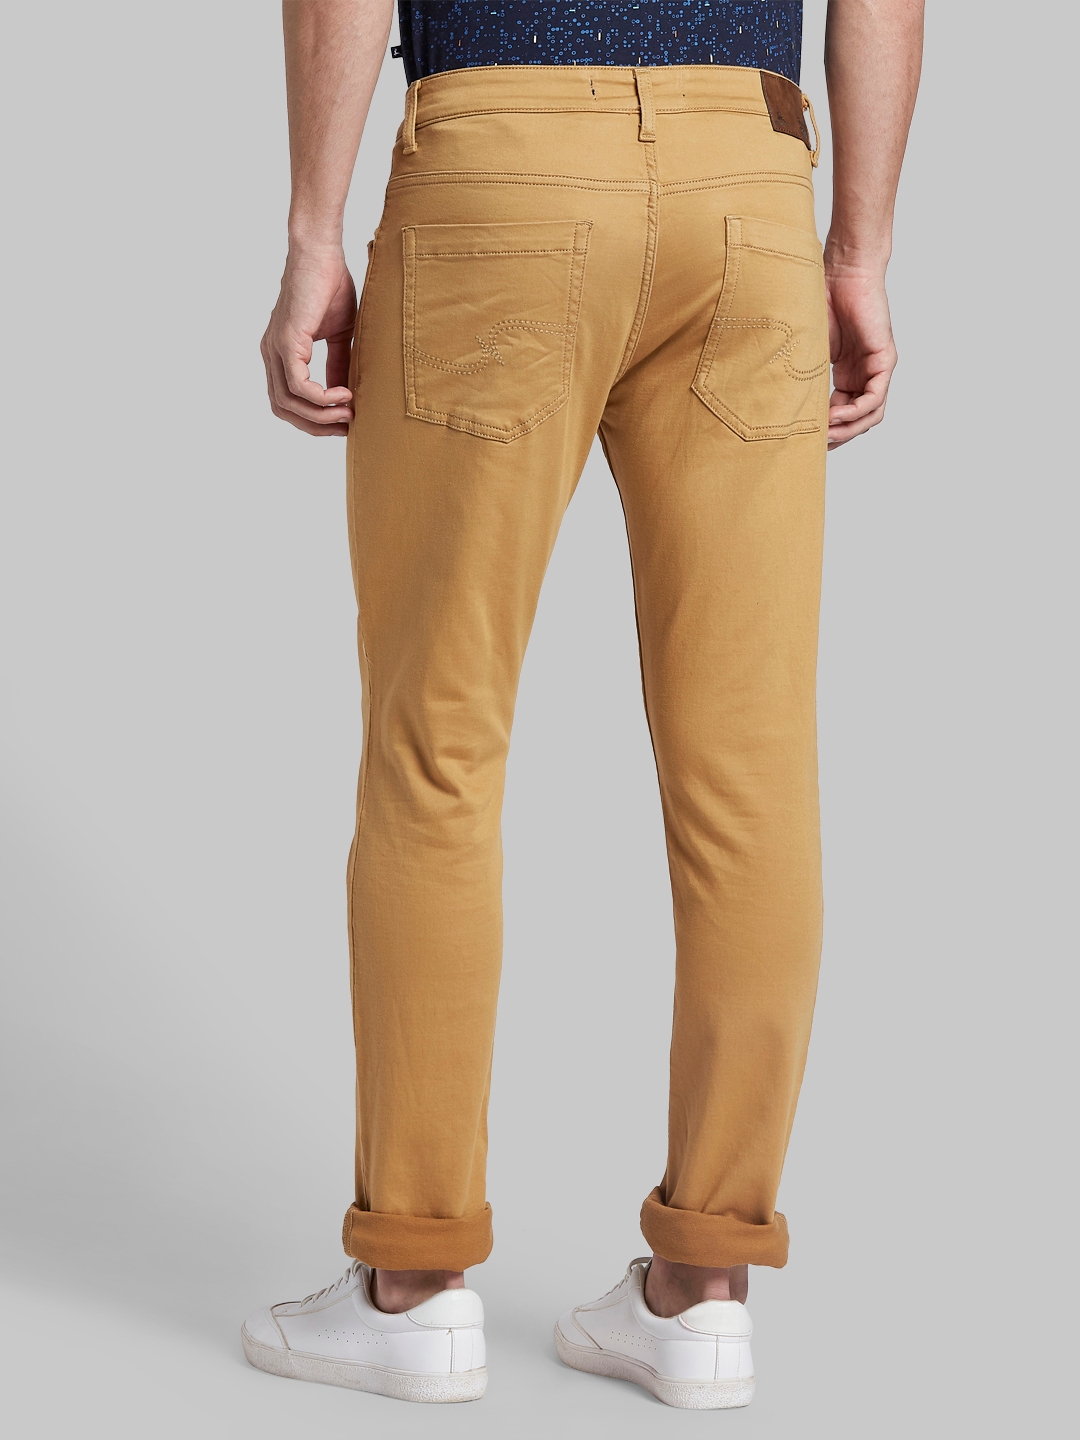 PARX | PARX Medium Khaki Jeans 3